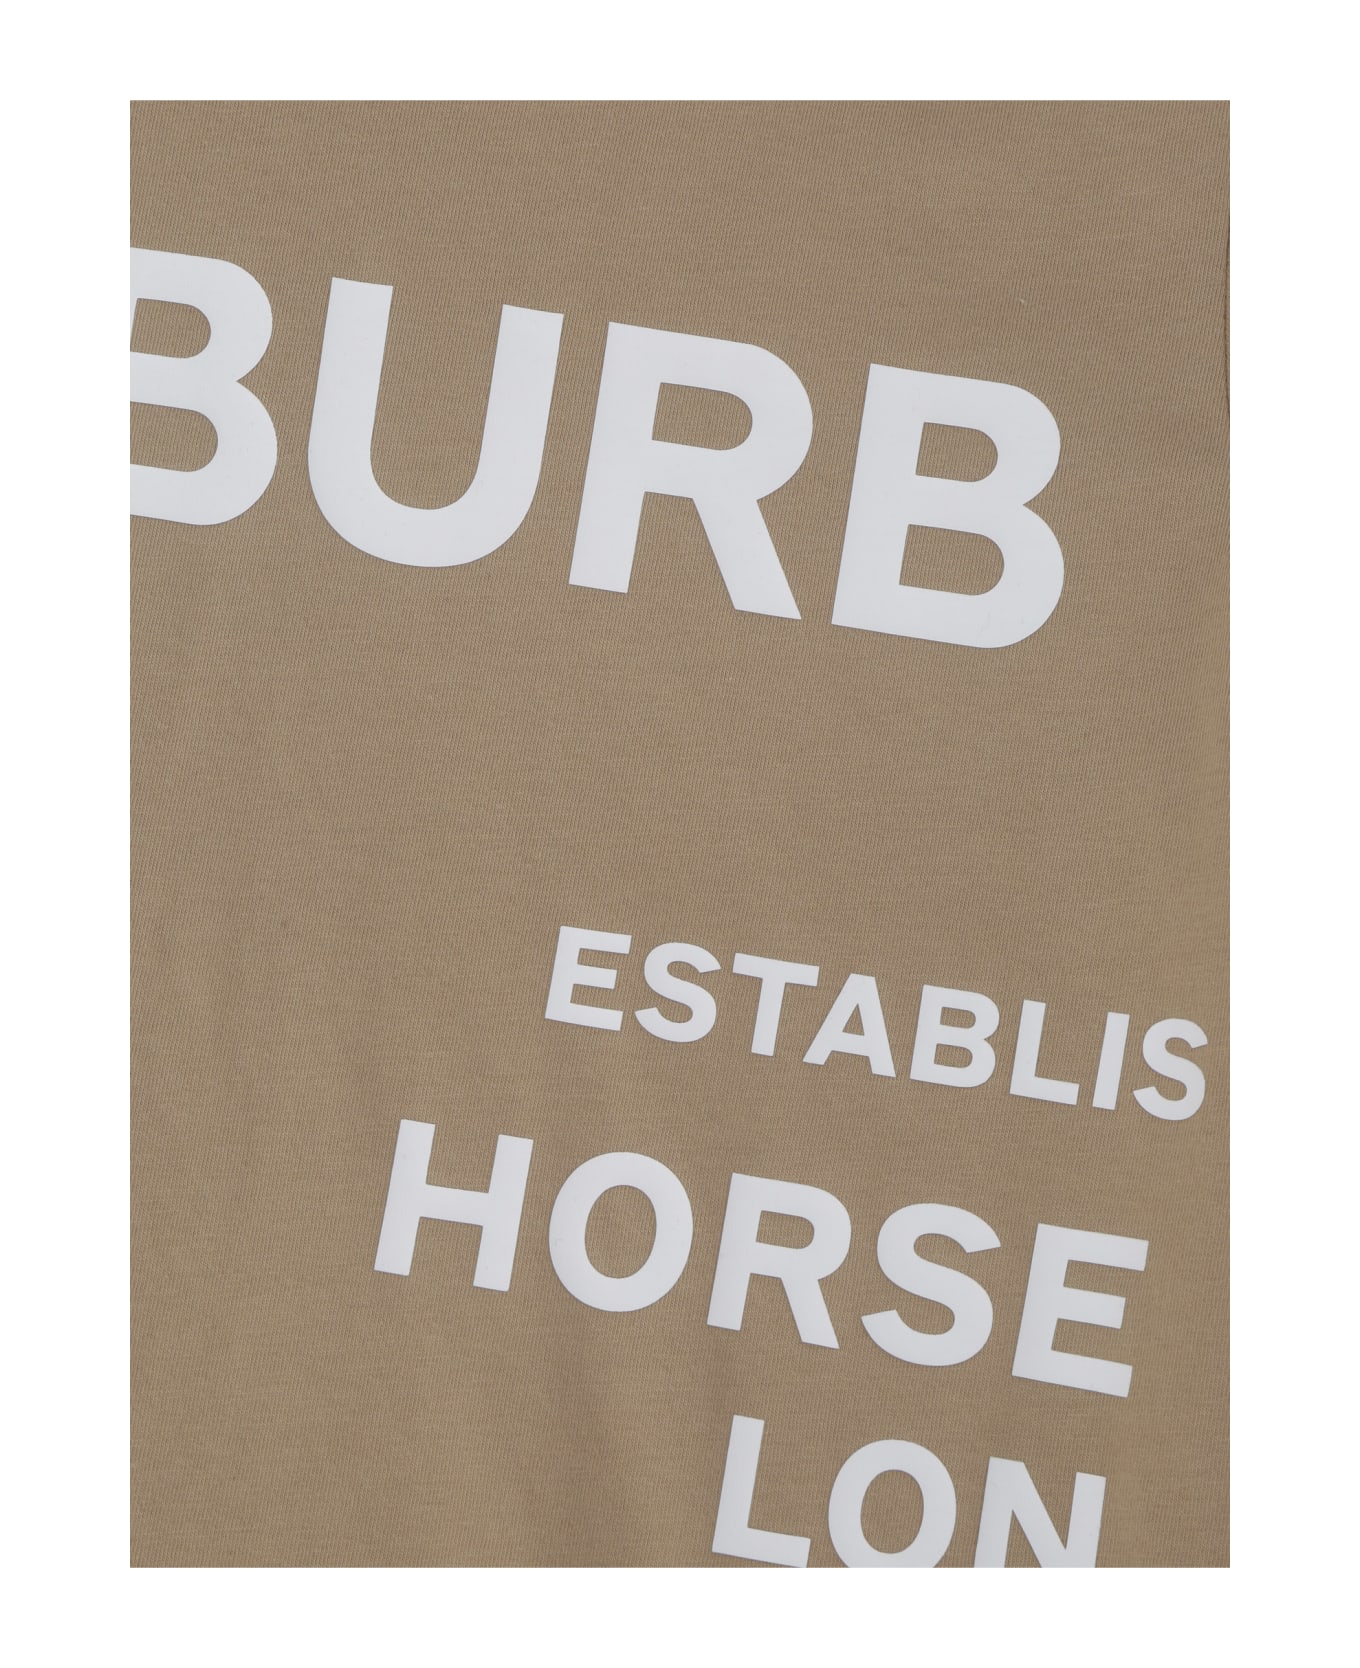 Burberry Jessy T-shirt For Boys - Beige